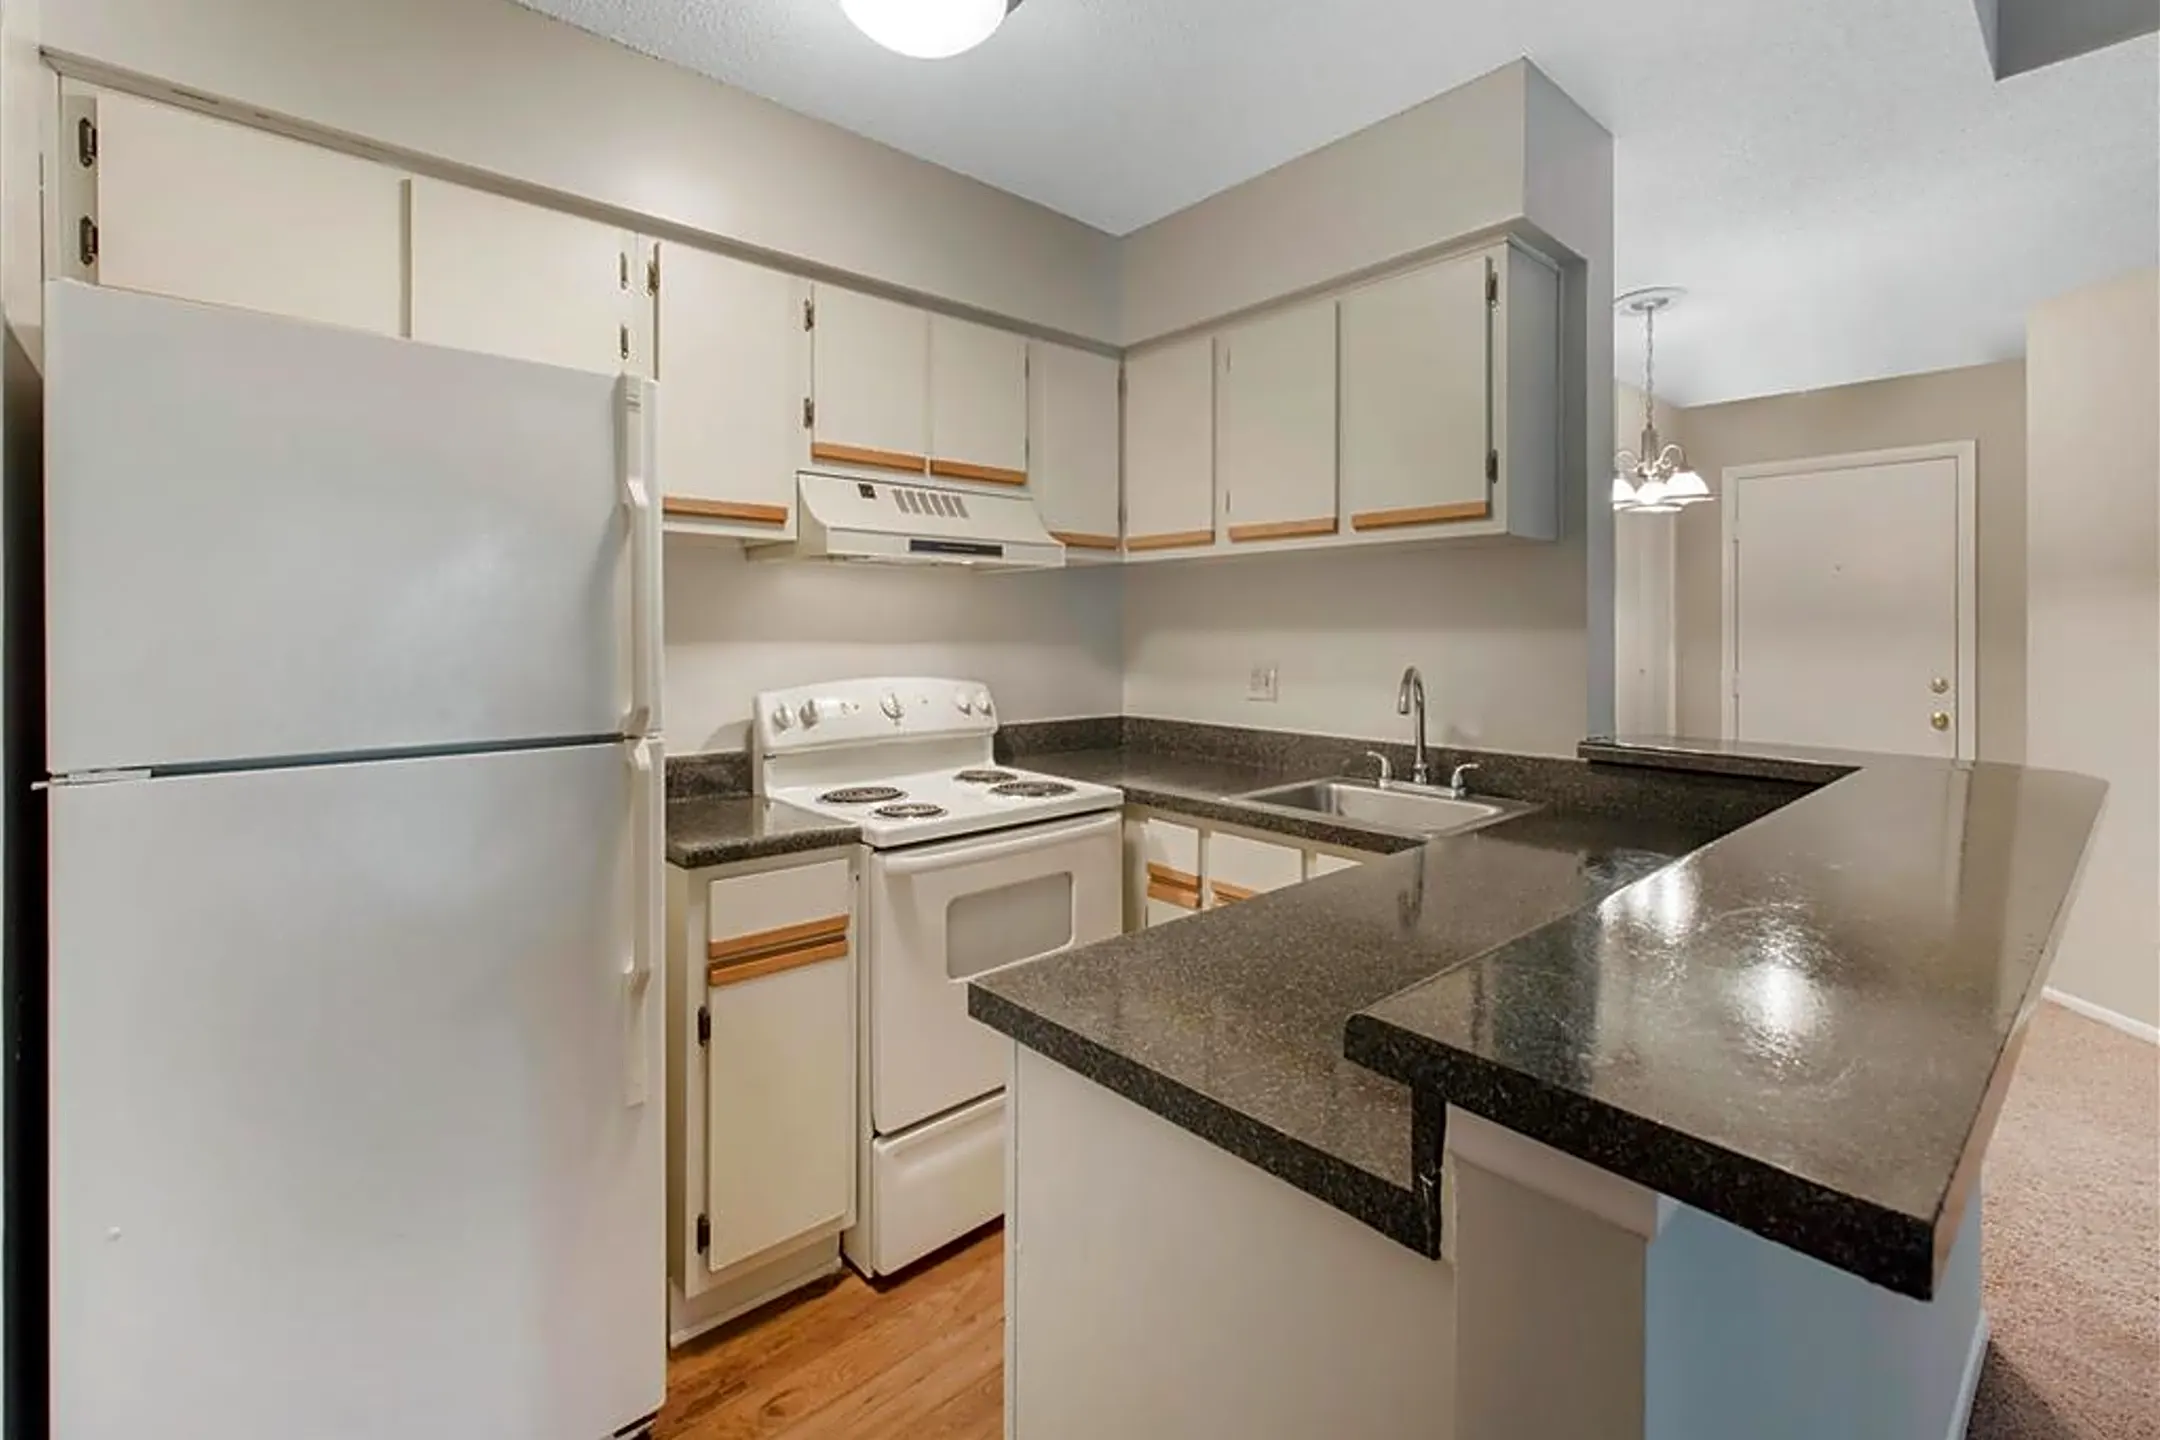 Kitchen - The Verandahs Apartments - Montgomery Village, MD